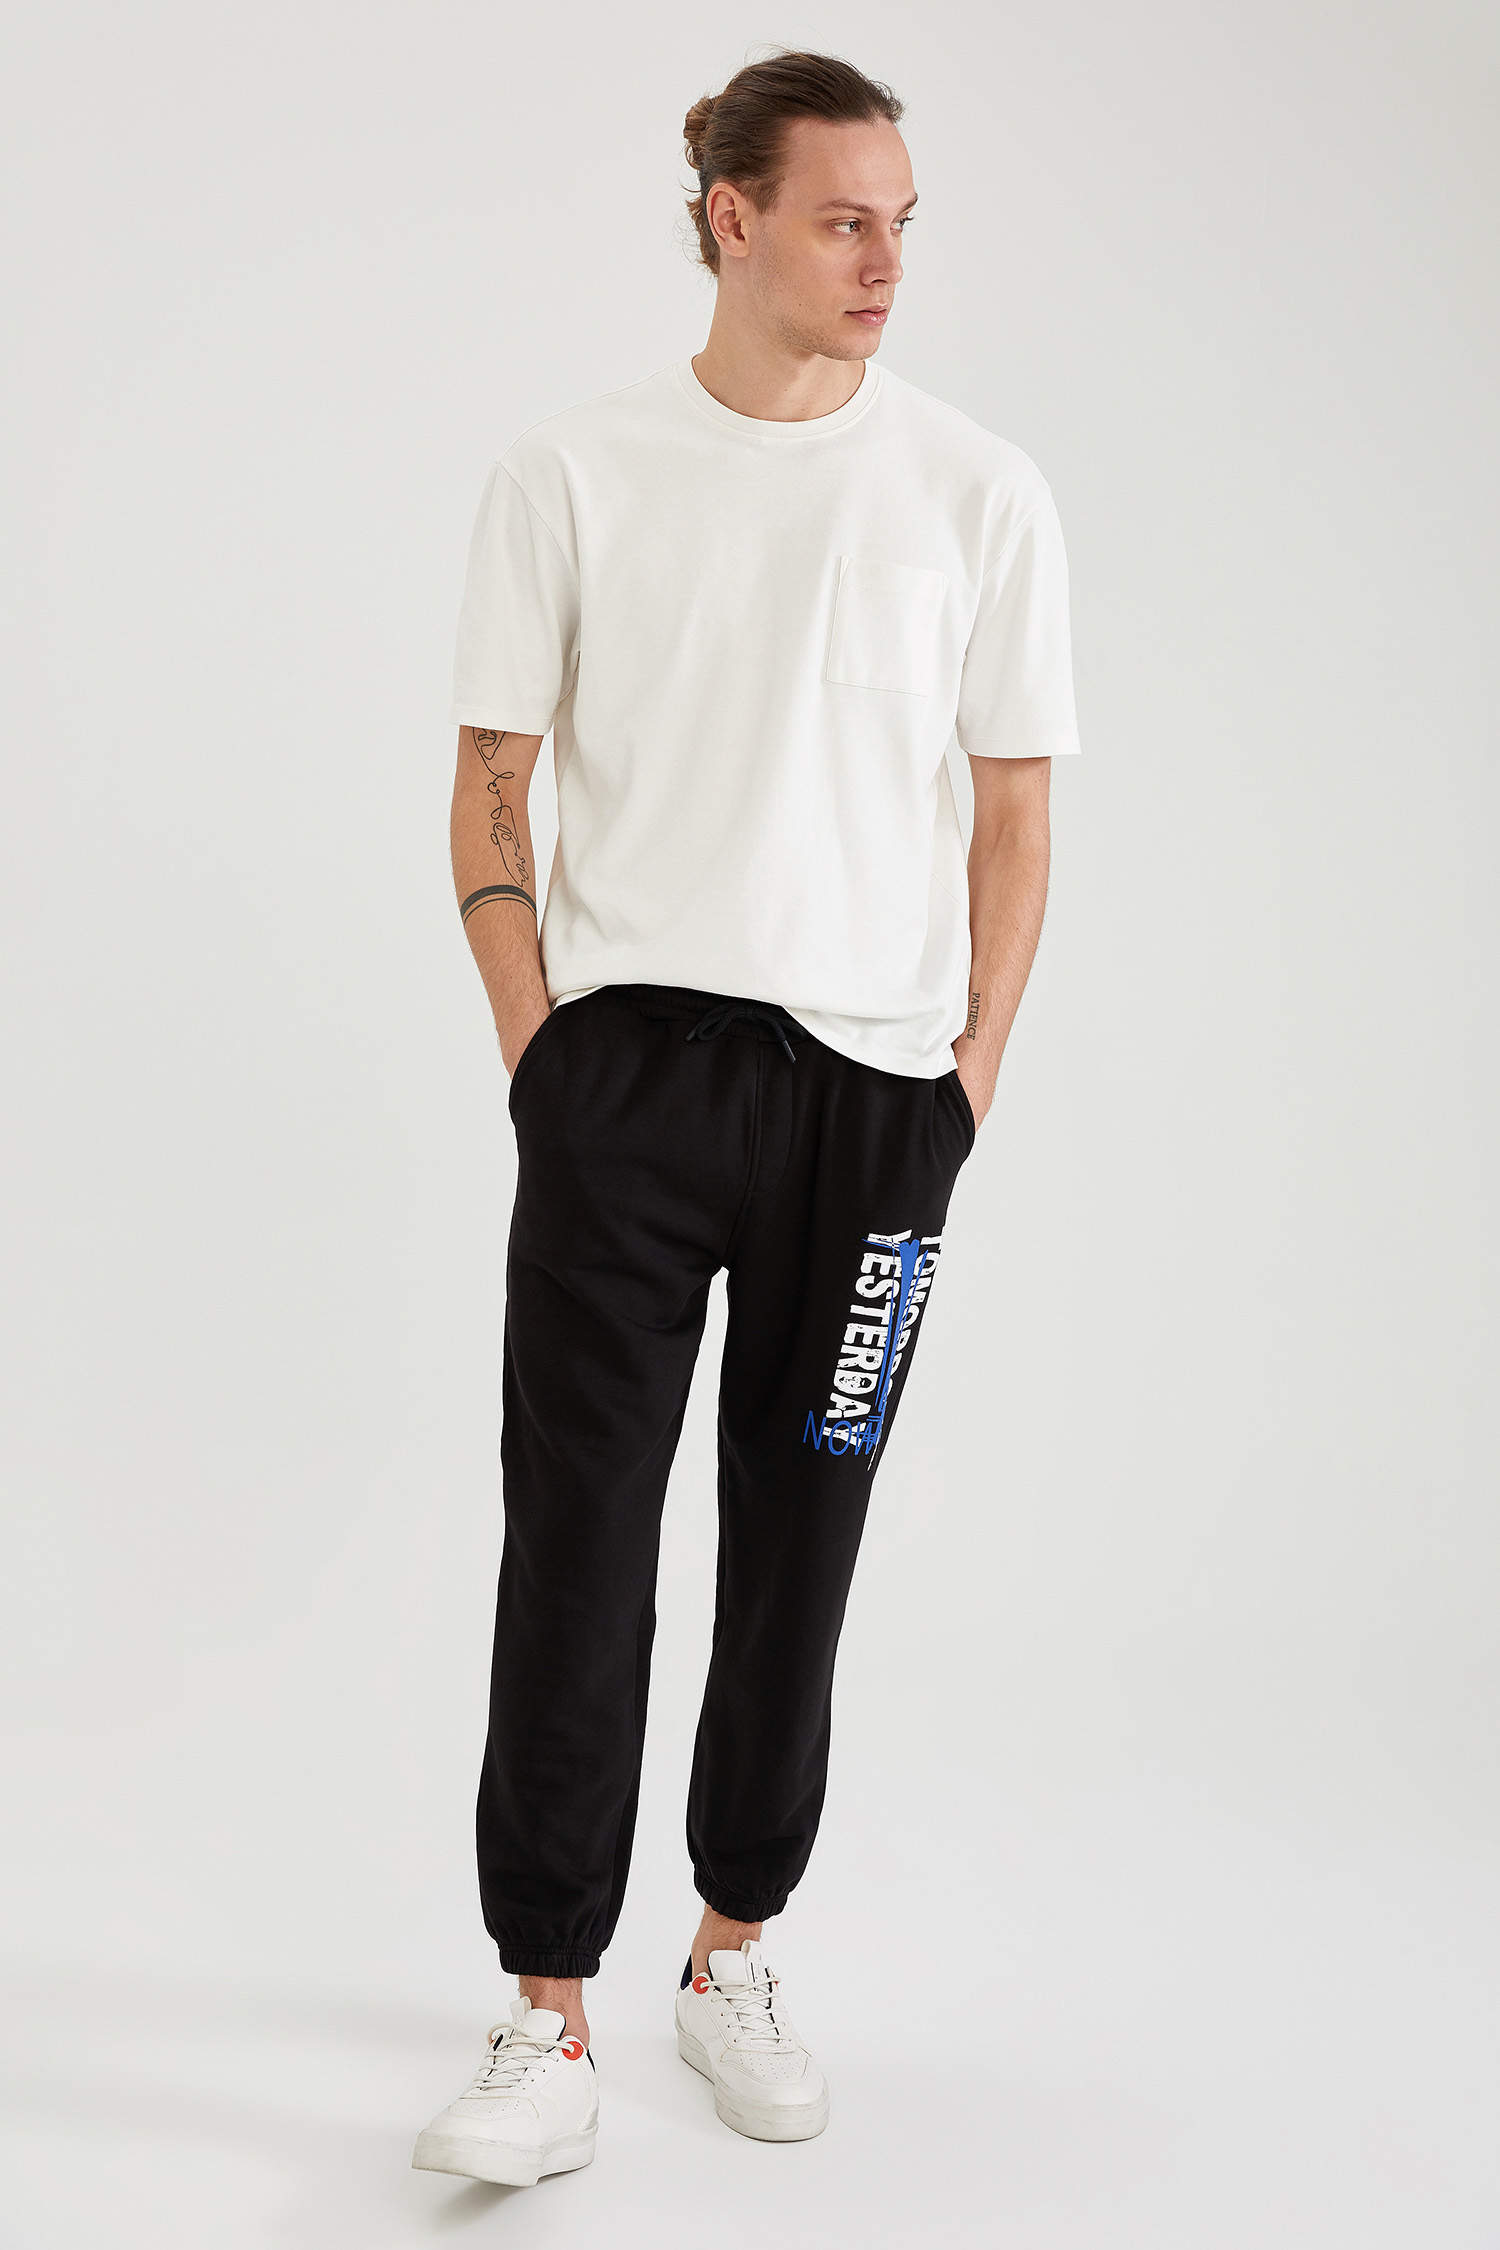 Buy UNIFACO Teenager 3D Digital Print Splatter Jogger Pants Casual Baggy  Sweatpants Black S at Amazonin